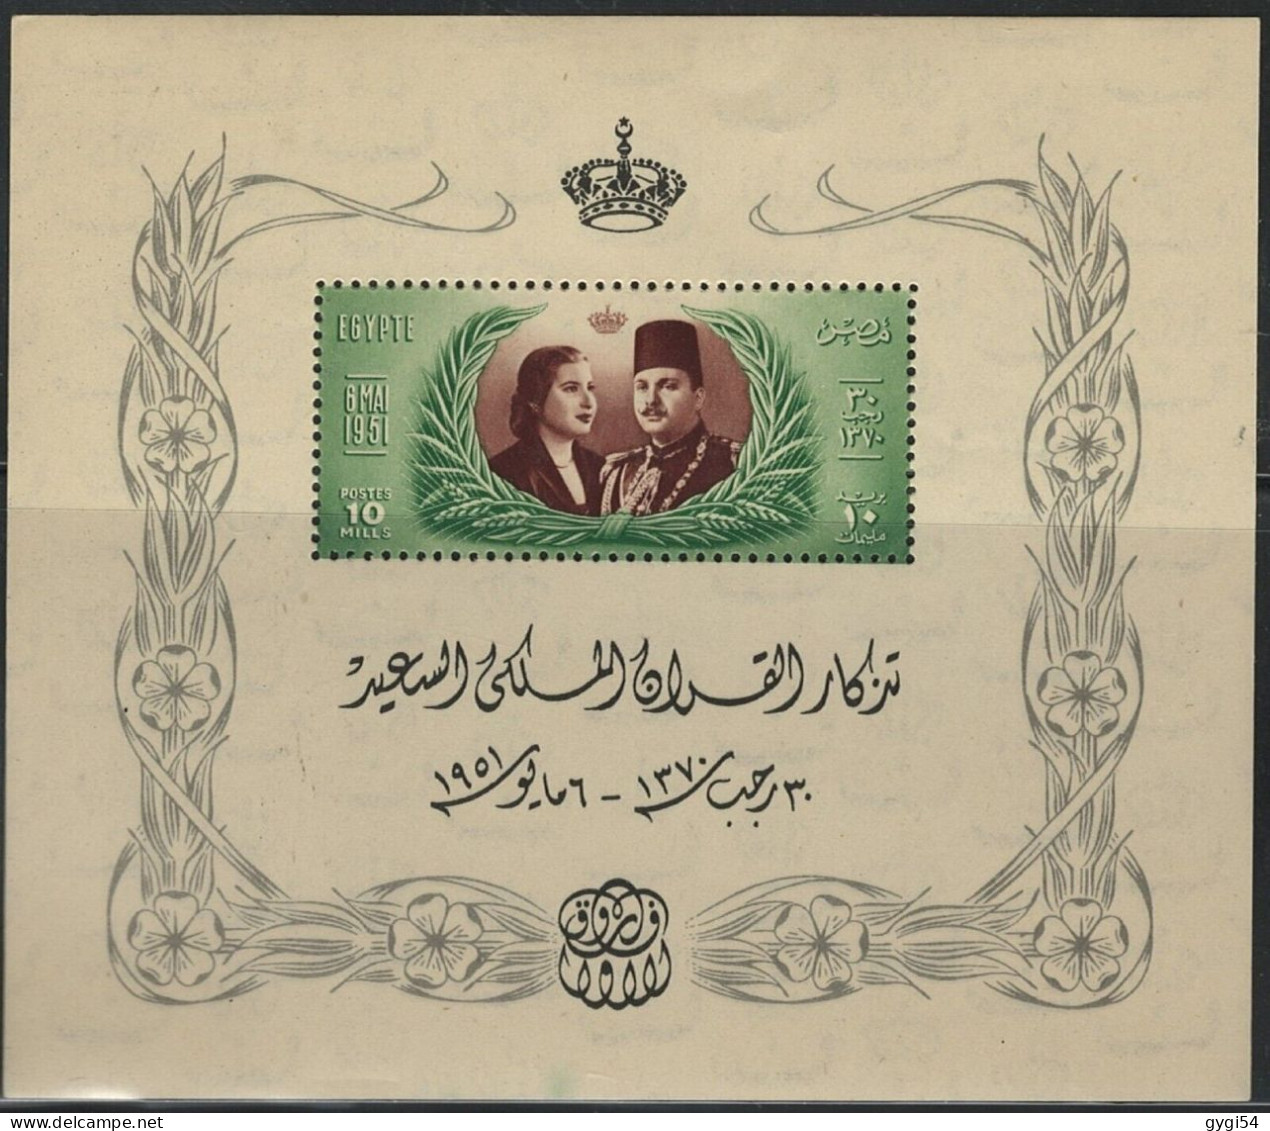 EGYPTE-1951 2   MARIAGE DU ROI FAROUK-NAREMAN-FEUILLE SOUVENIR-MNH - Blocks & Kleinbögen